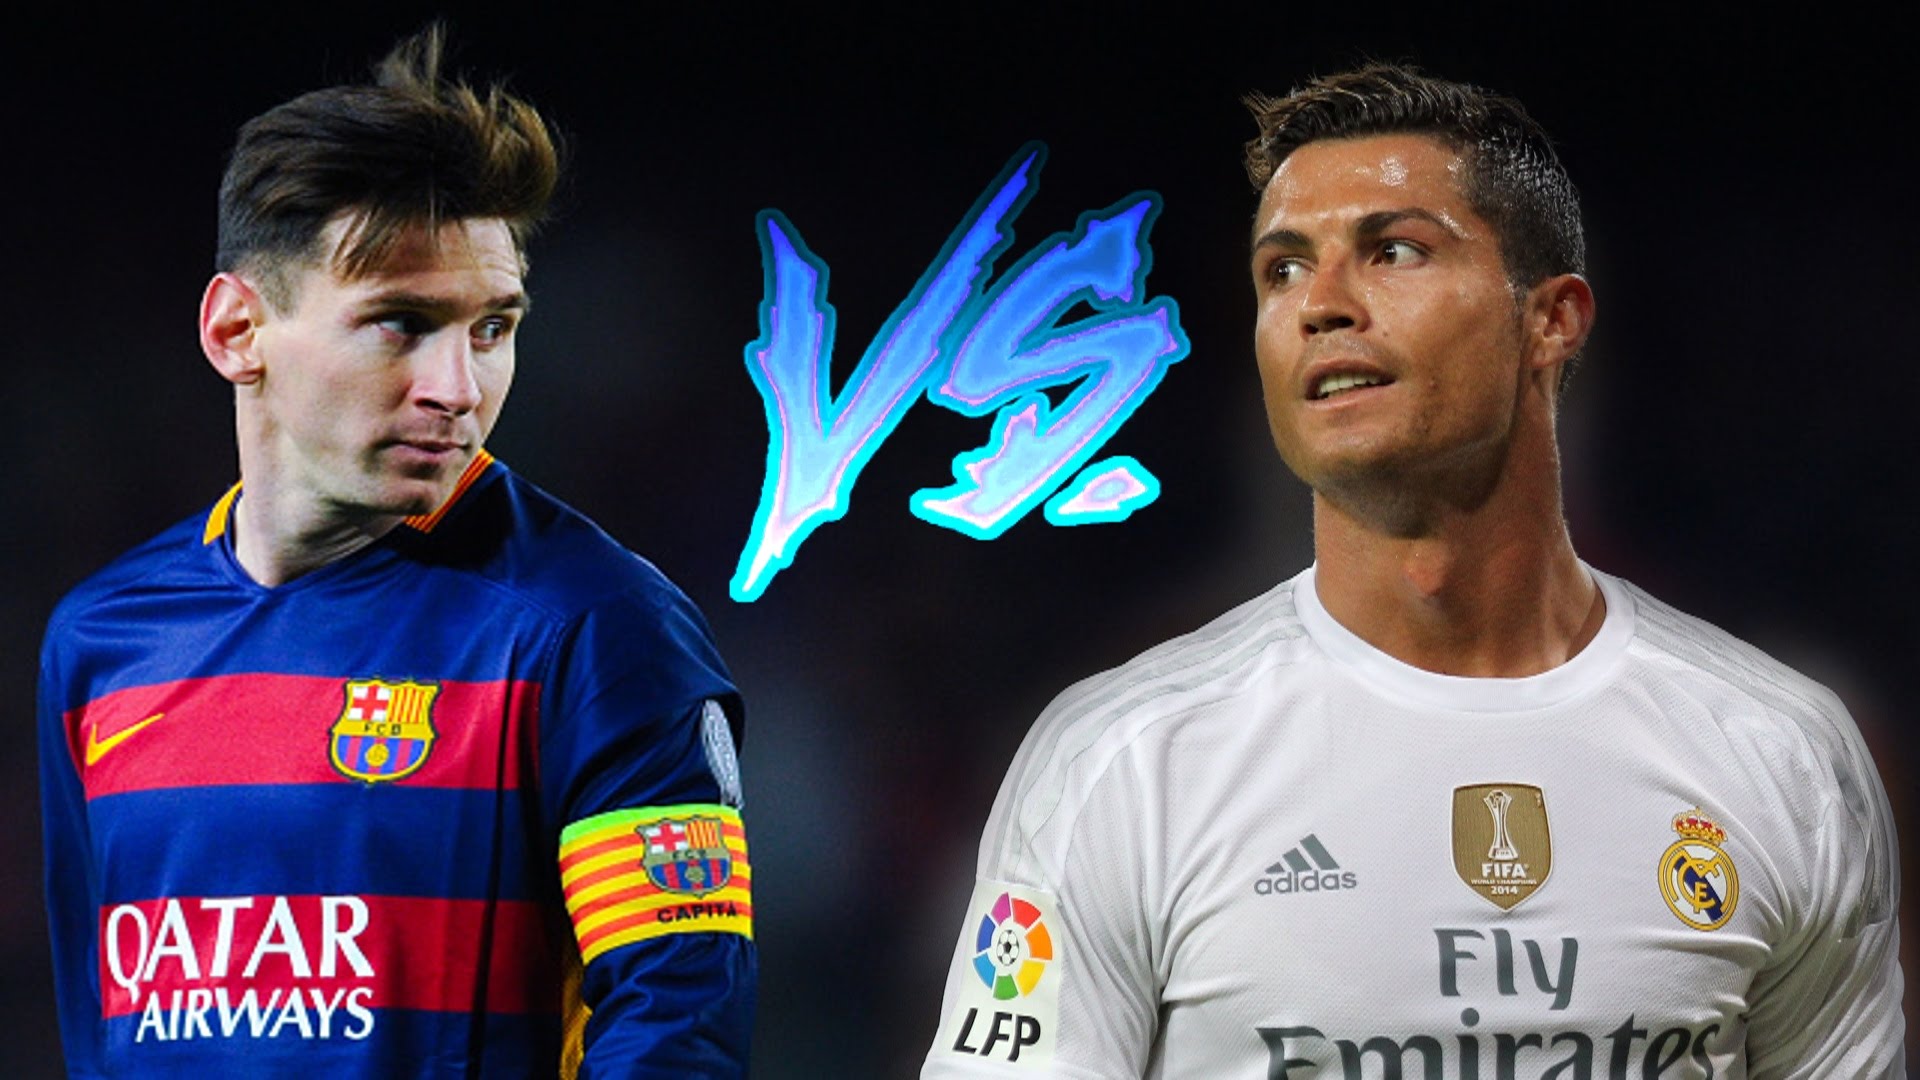 Lionel Messi vs Ronaldo odds